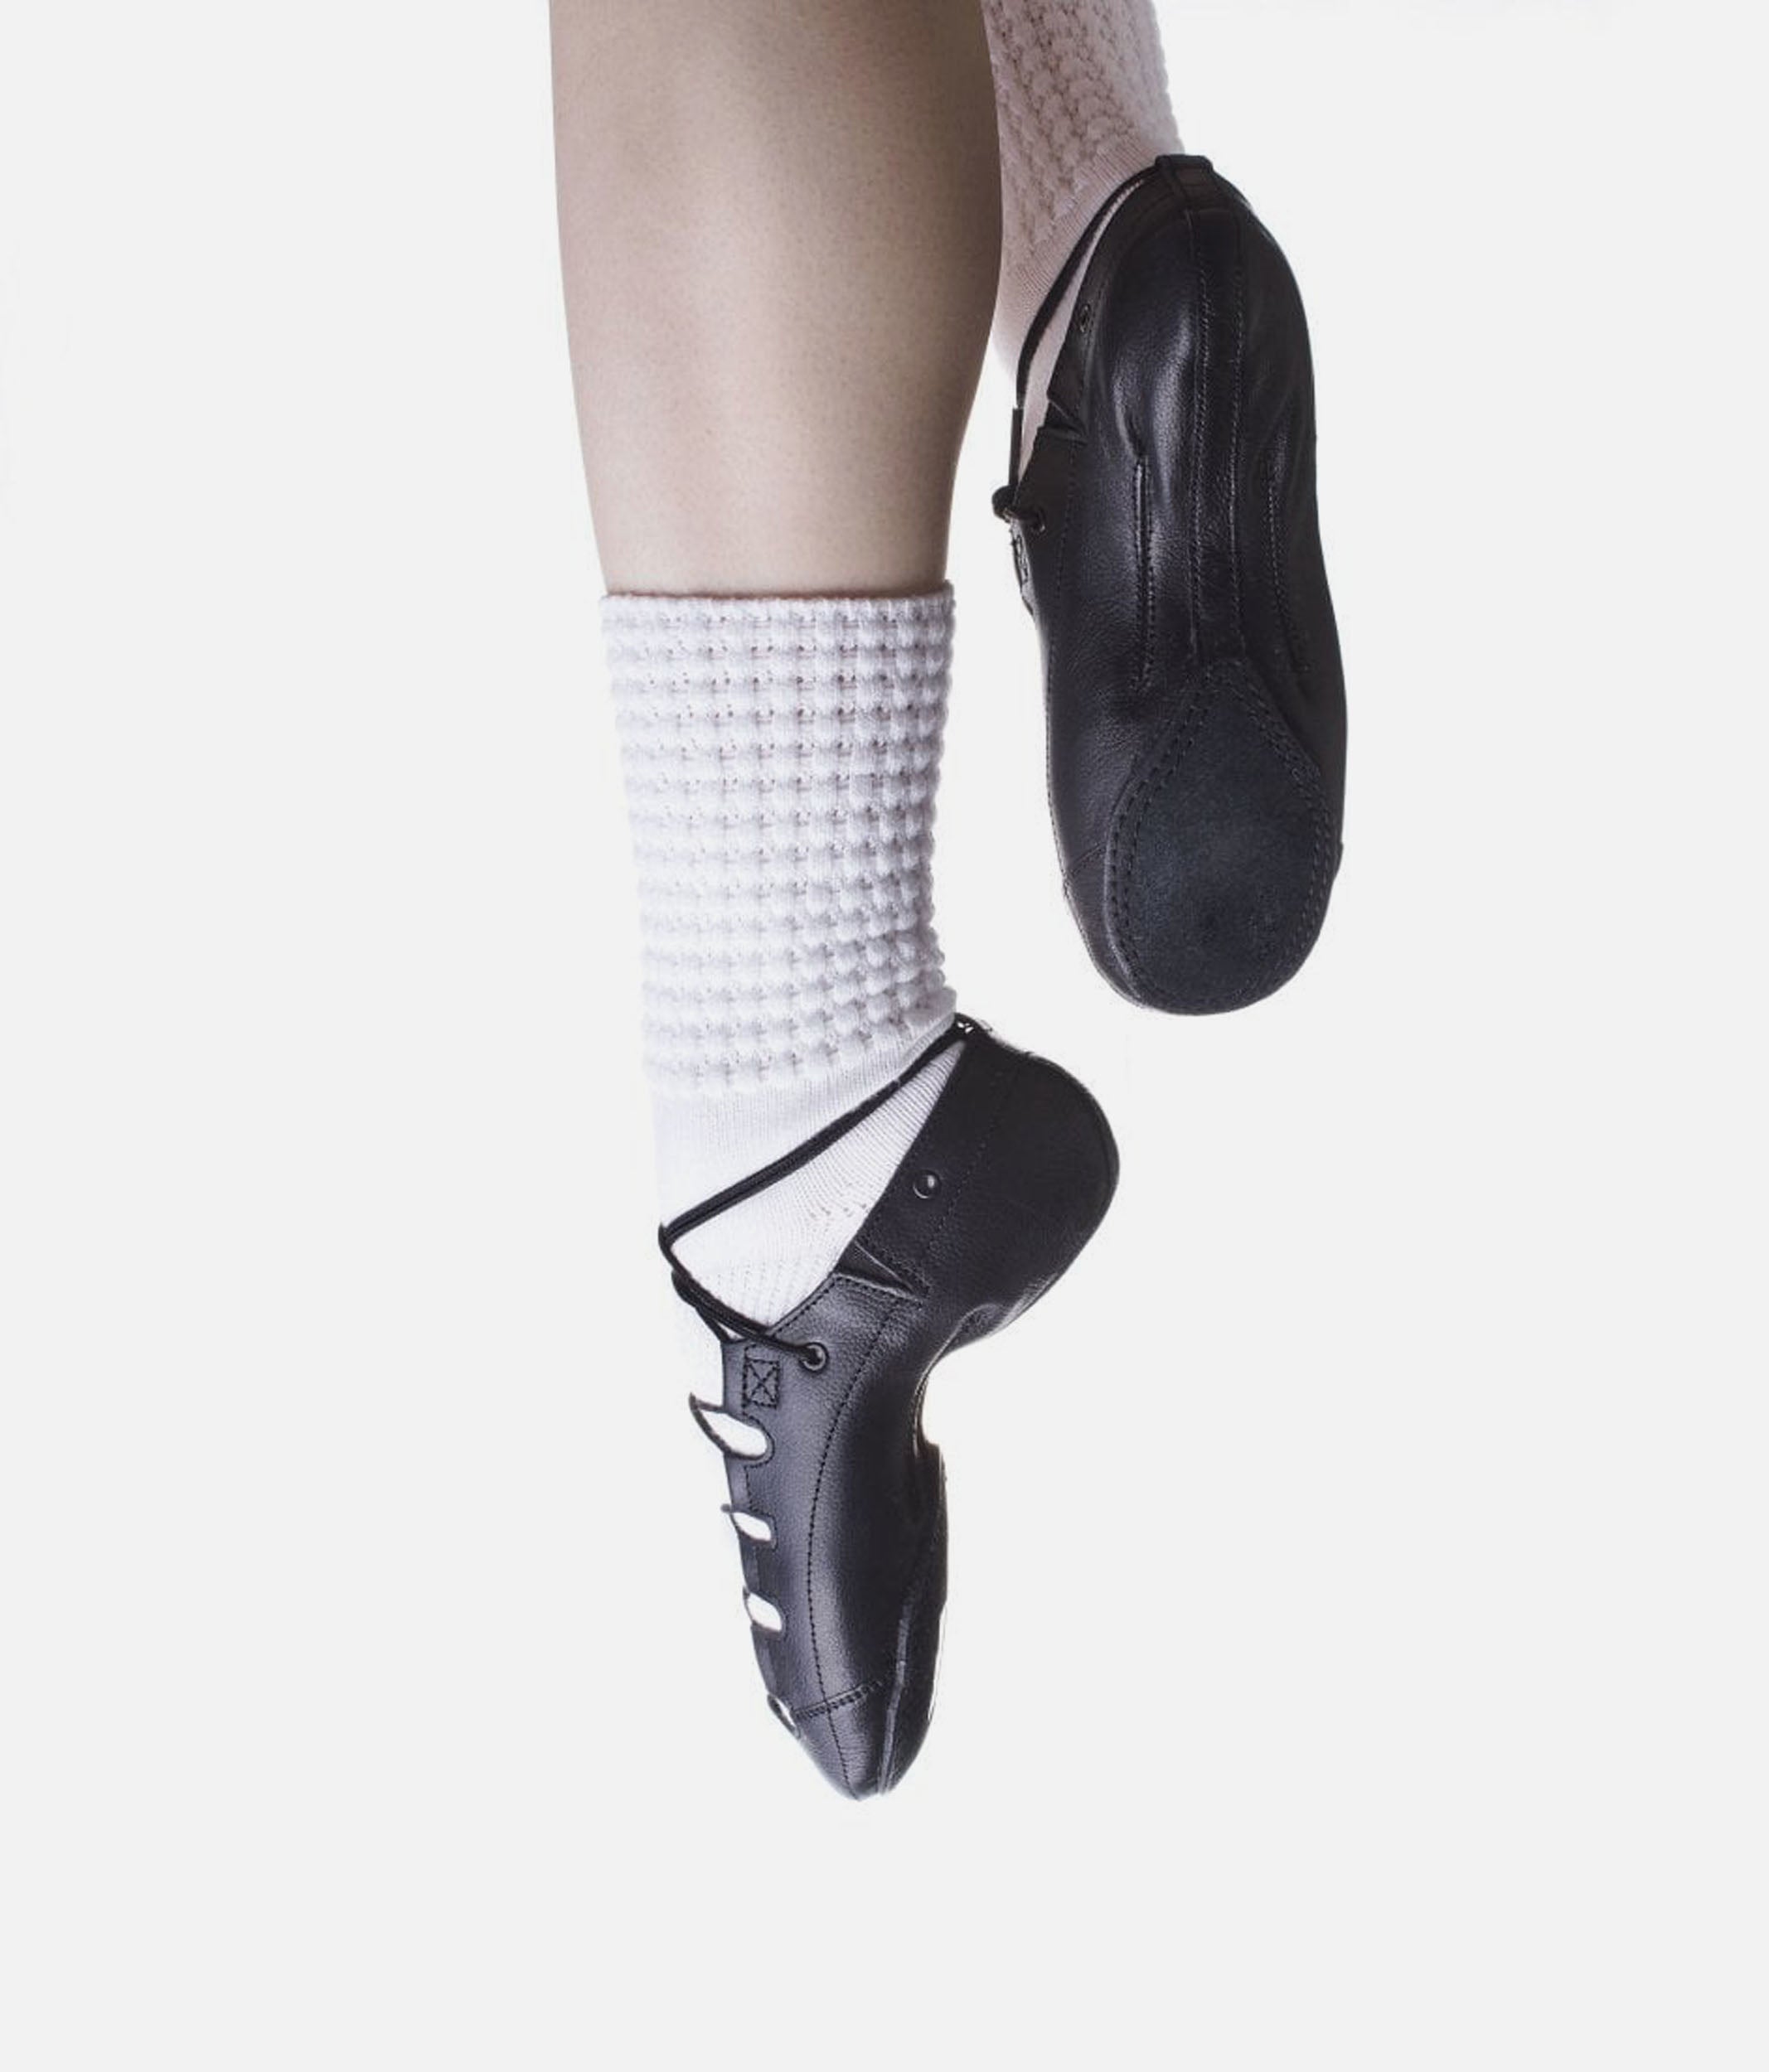 Antonio Pacelli Ankle Length Poodle Socks for Irish Dance – Dance